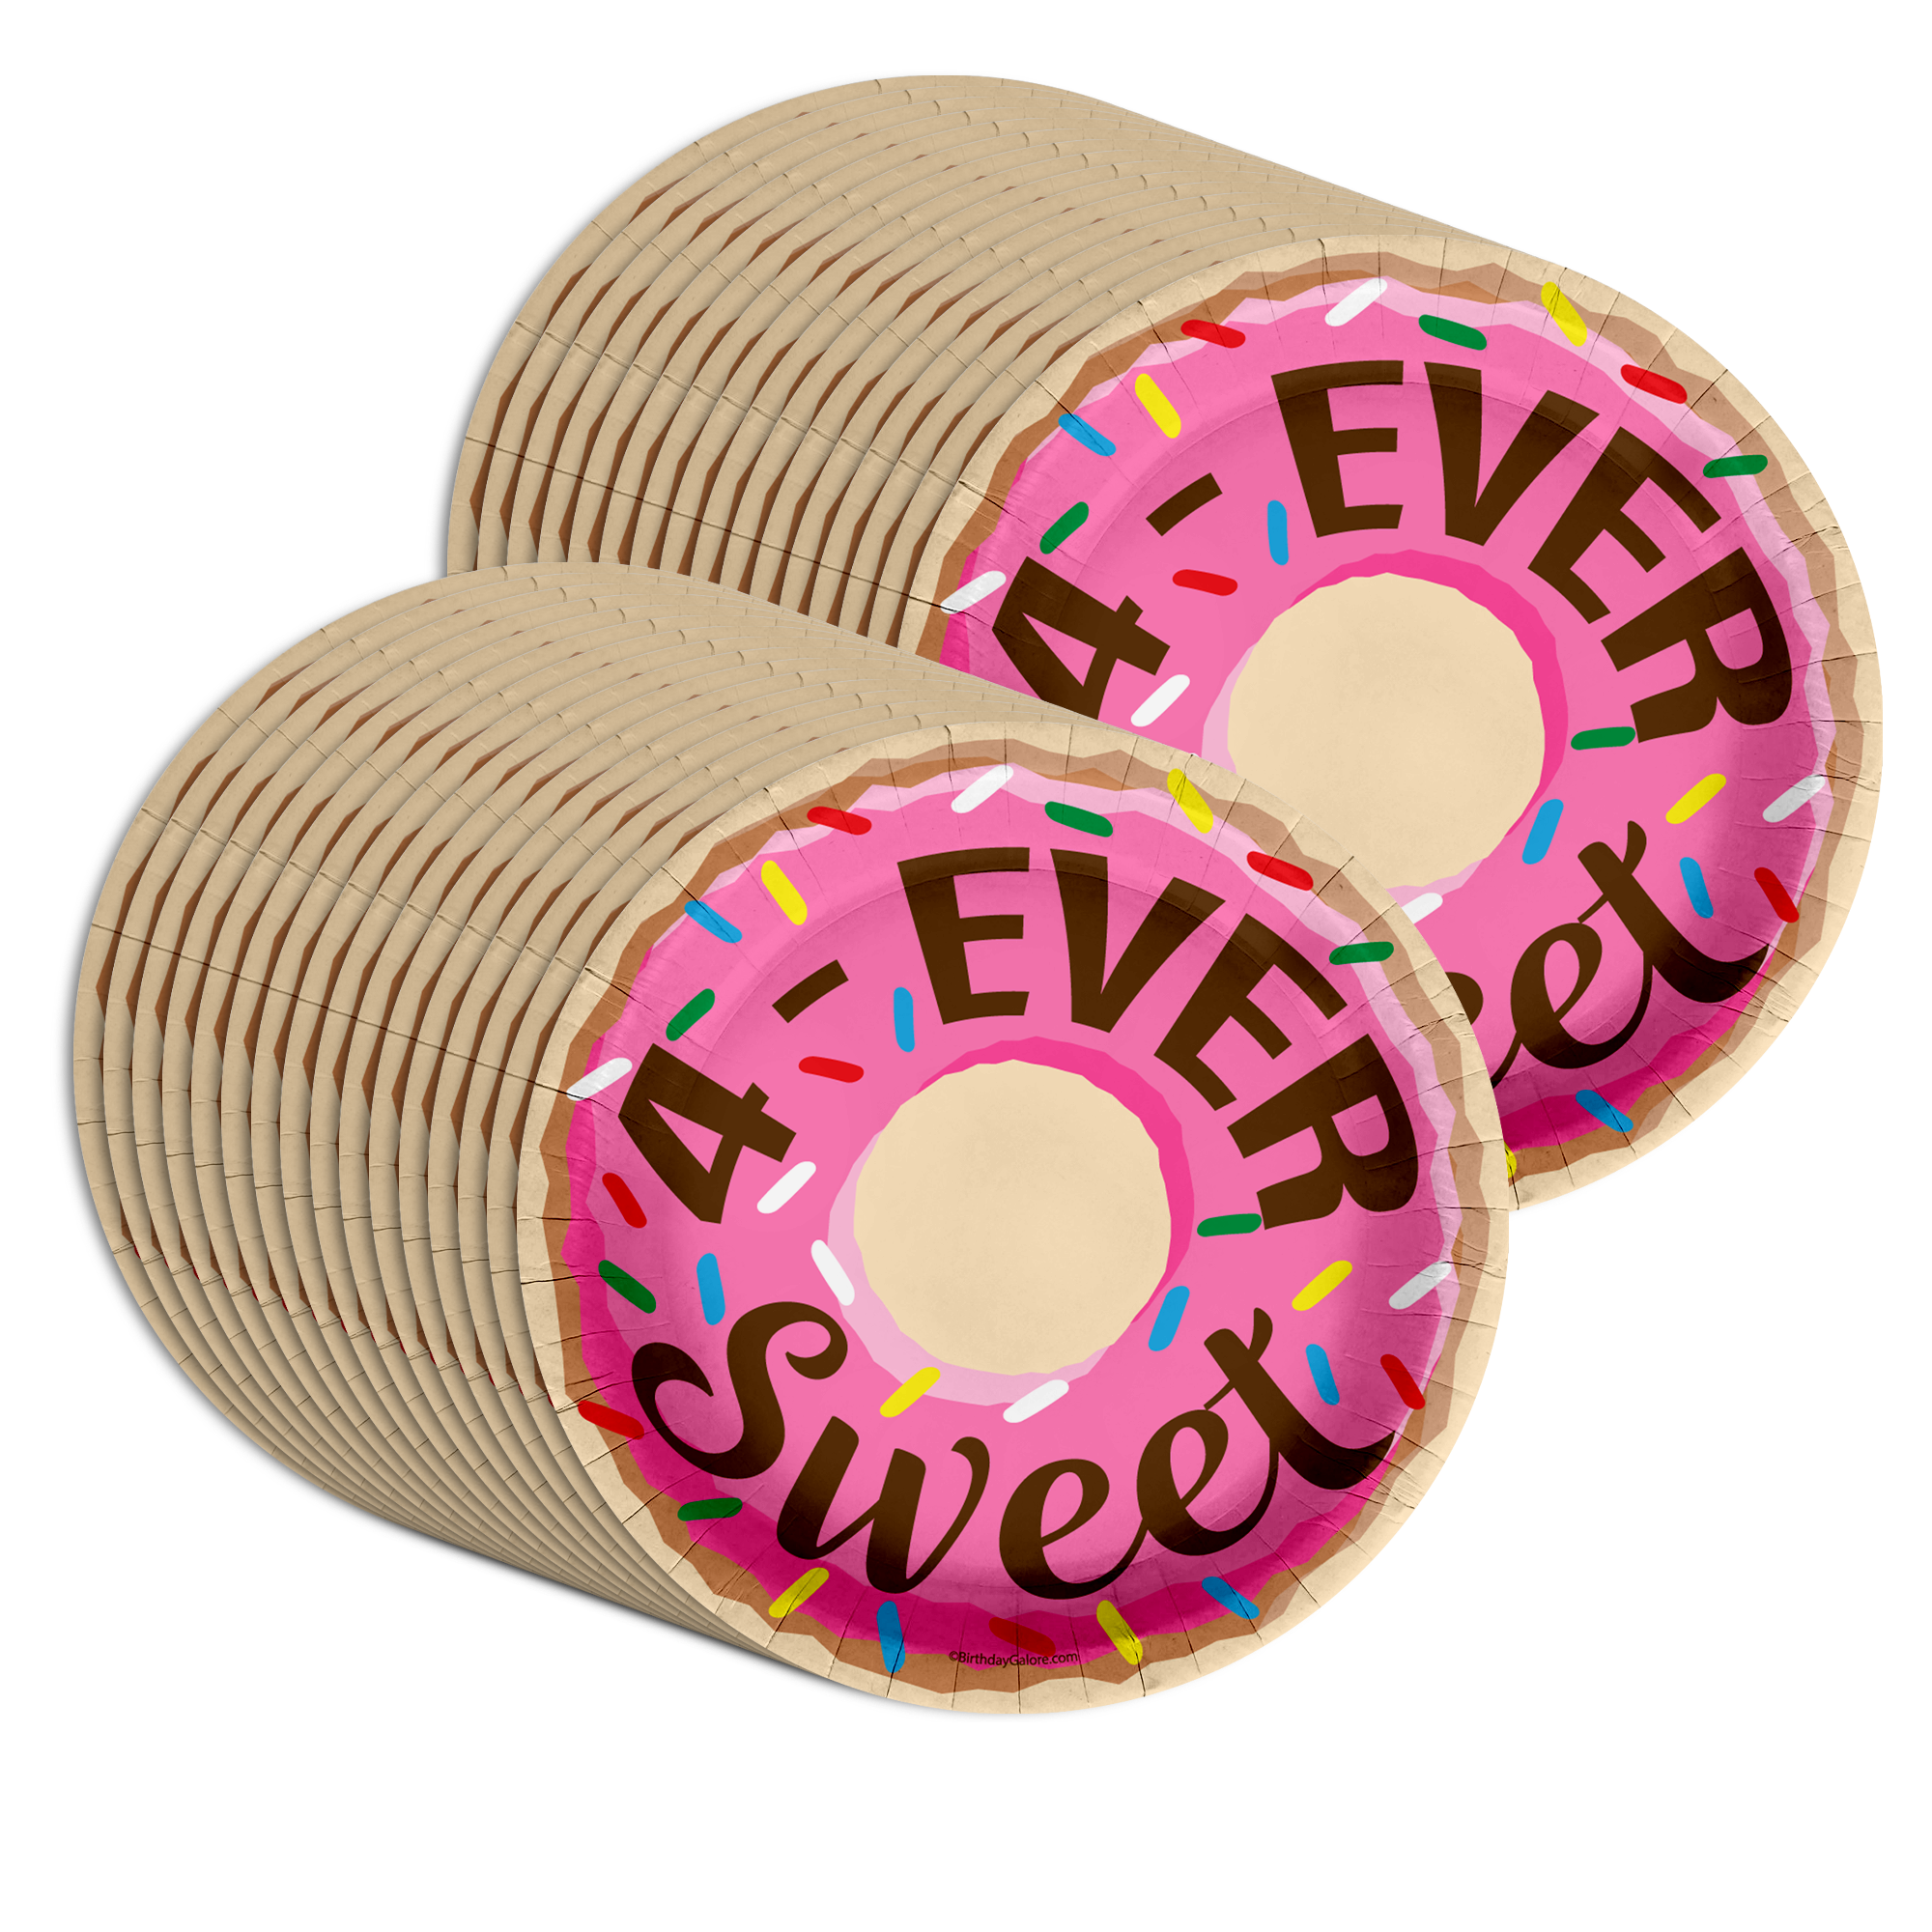 Girls 4th Birthday Party Supplies - Fourever Sweet Donut Birthday Paper Plates - Large 9" Paper Plates in Bulk 32 Piece